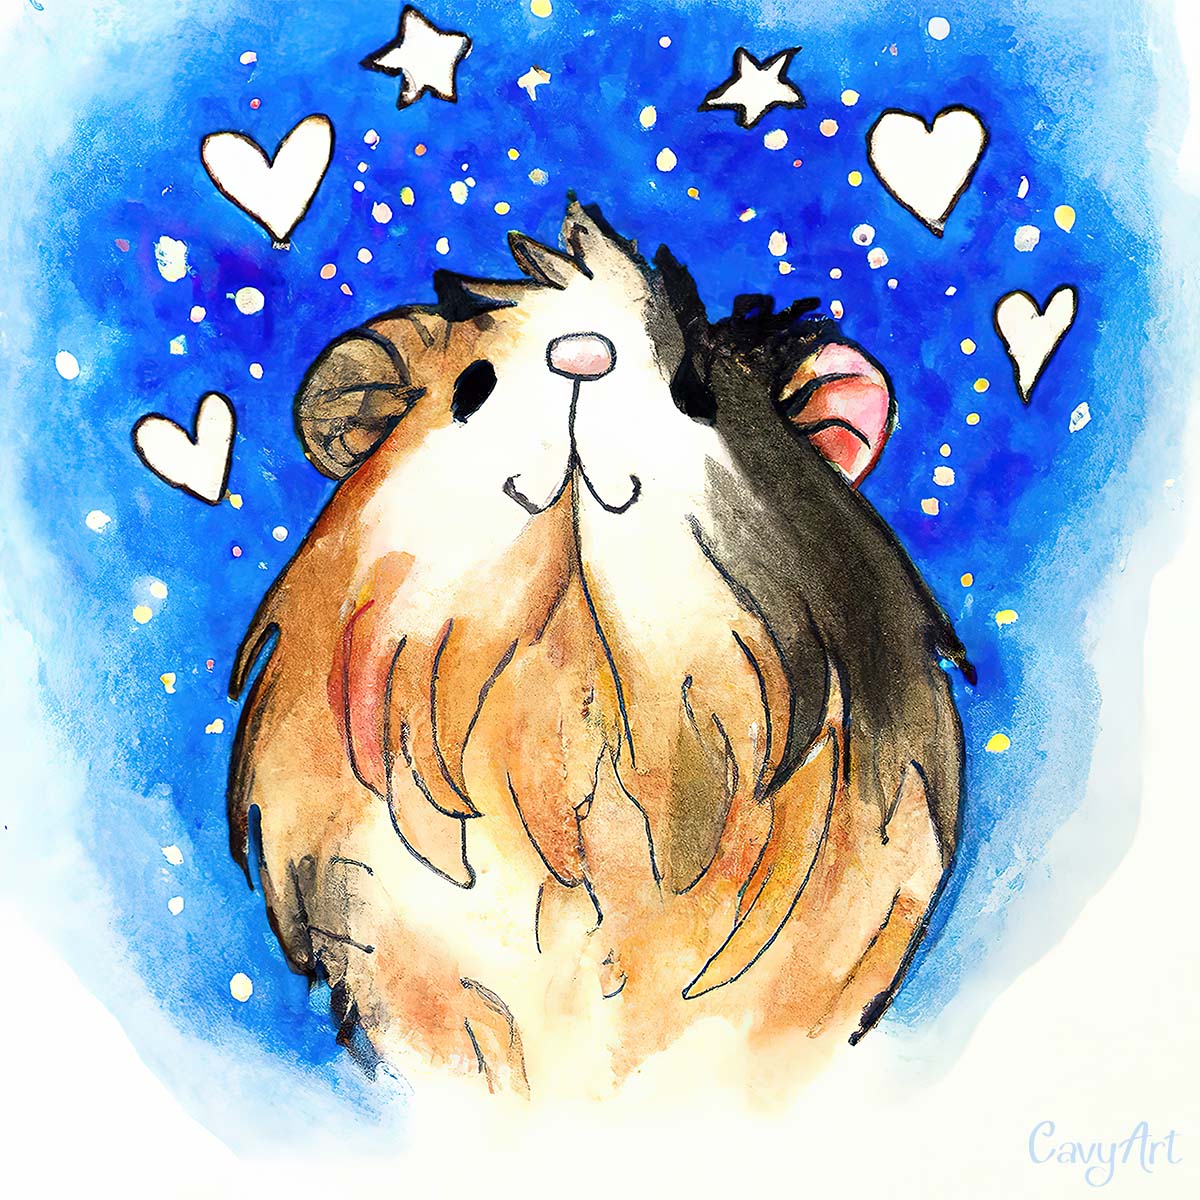 Guinea pig under the stars illustration from CavyArt